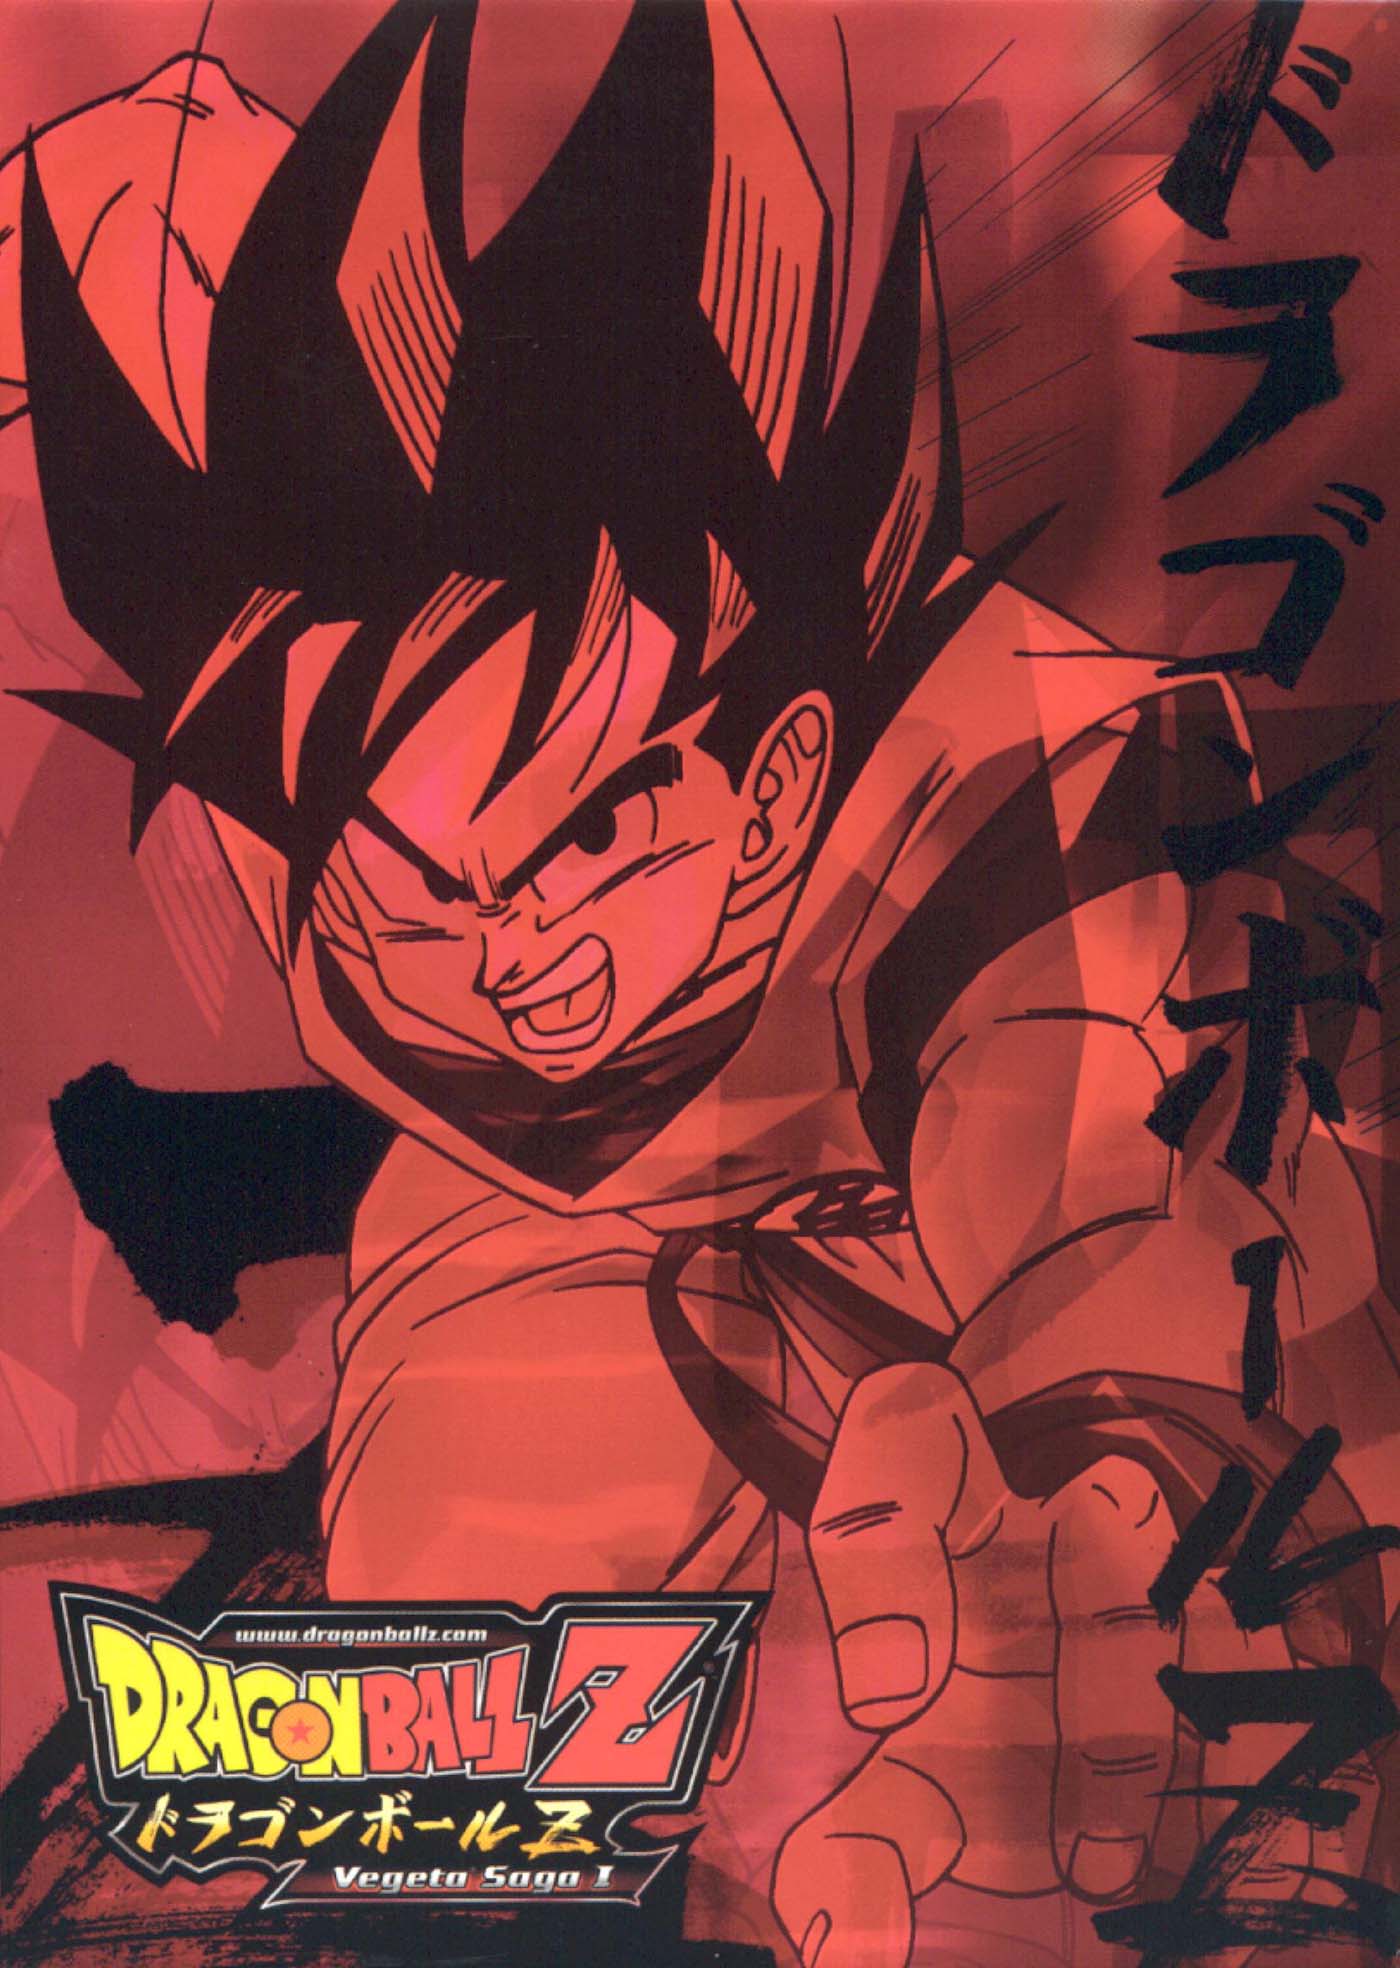 Dragon Ball Z Vegeta Saga 1 - Saiyan Showdown - Brand New Anime DVD